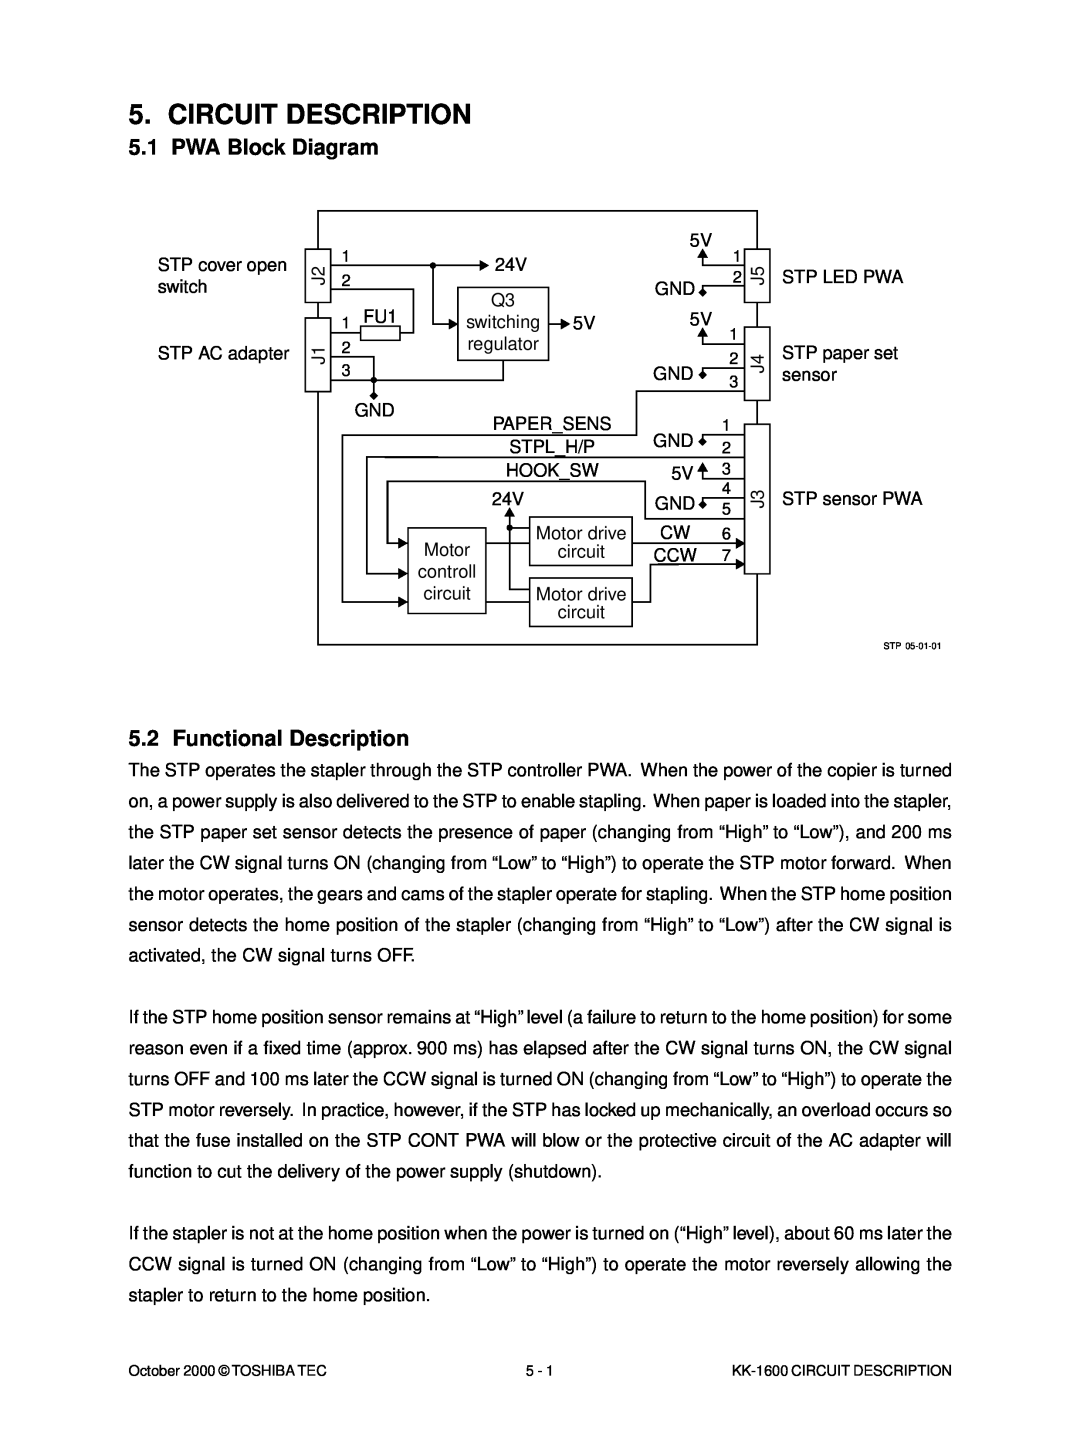 Toshiba KK-1600 manual Circuit Description, PWA Block Diagram, Functional Description 